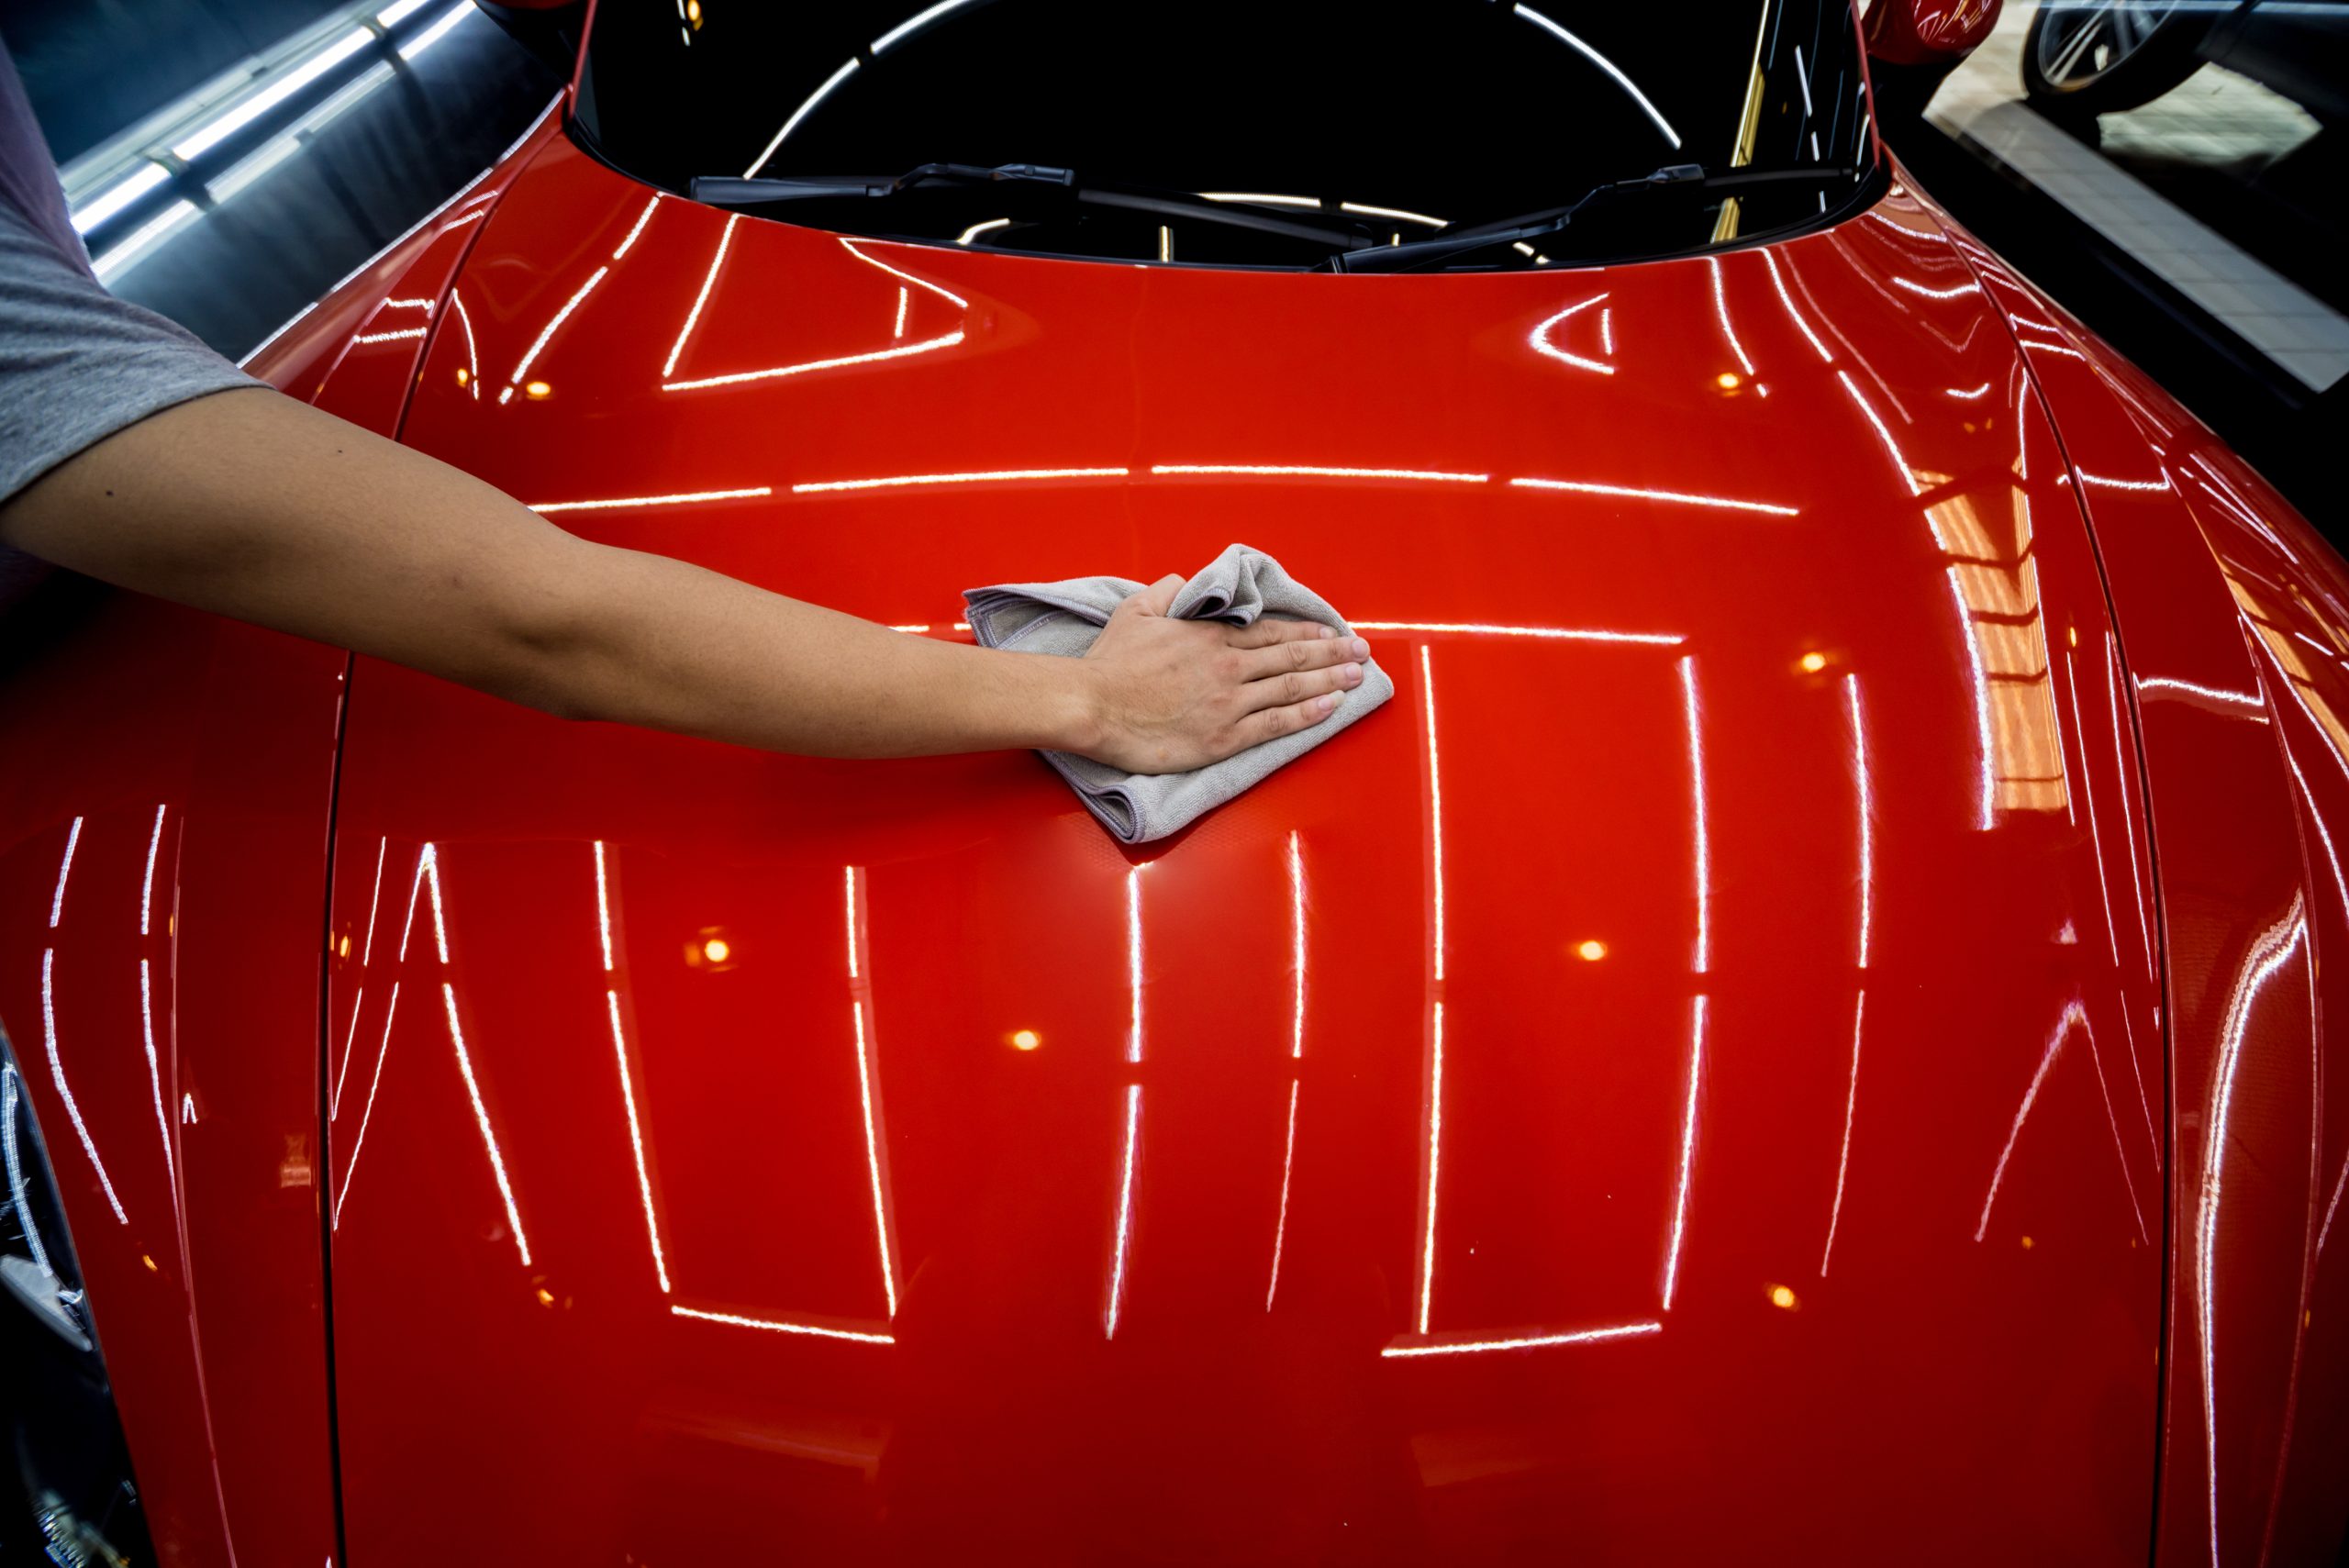 Car service worker applying nano coating on a car detail